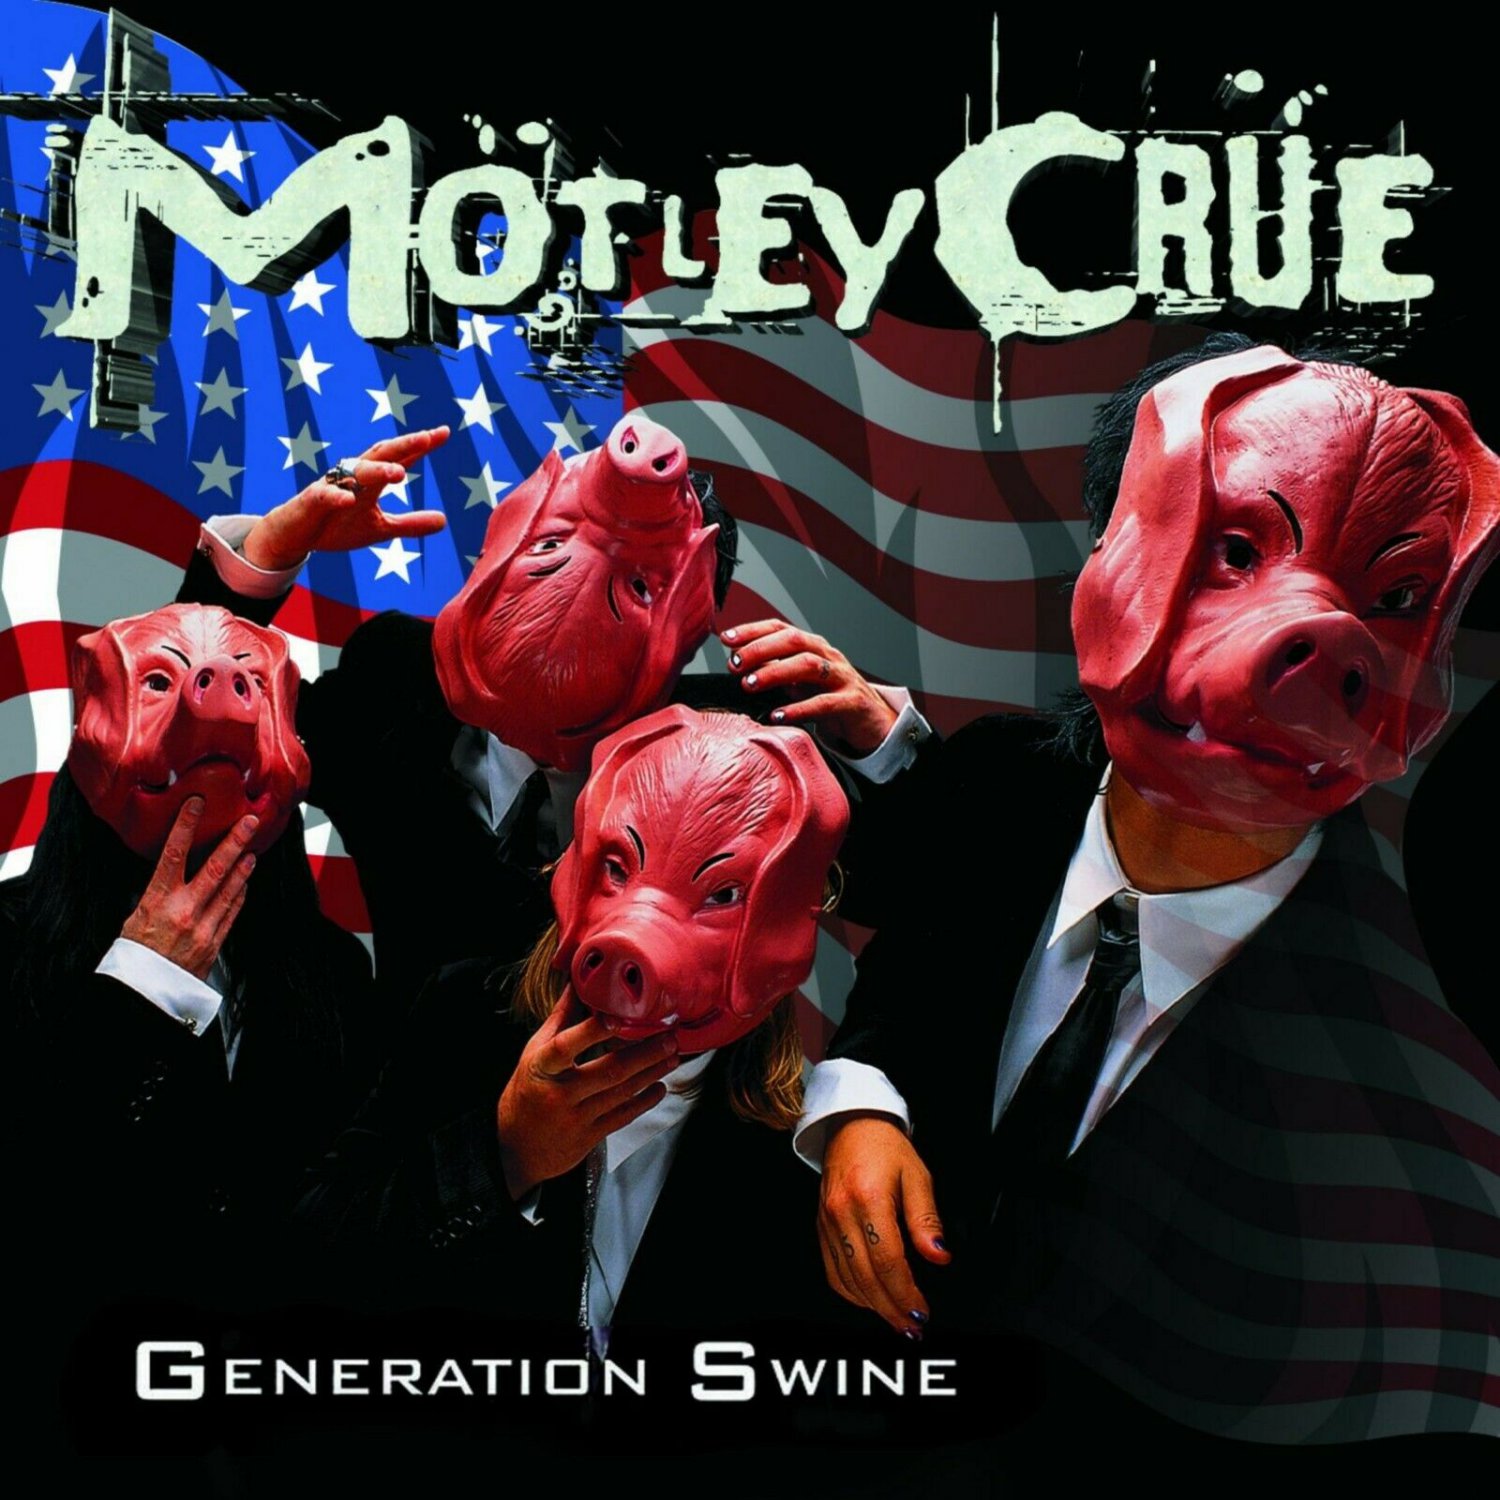 MOTLEY CRUE Generation Swine BANNER Huge 4X4 Ft Fabric Poster Tapestry Flag Print album cover art